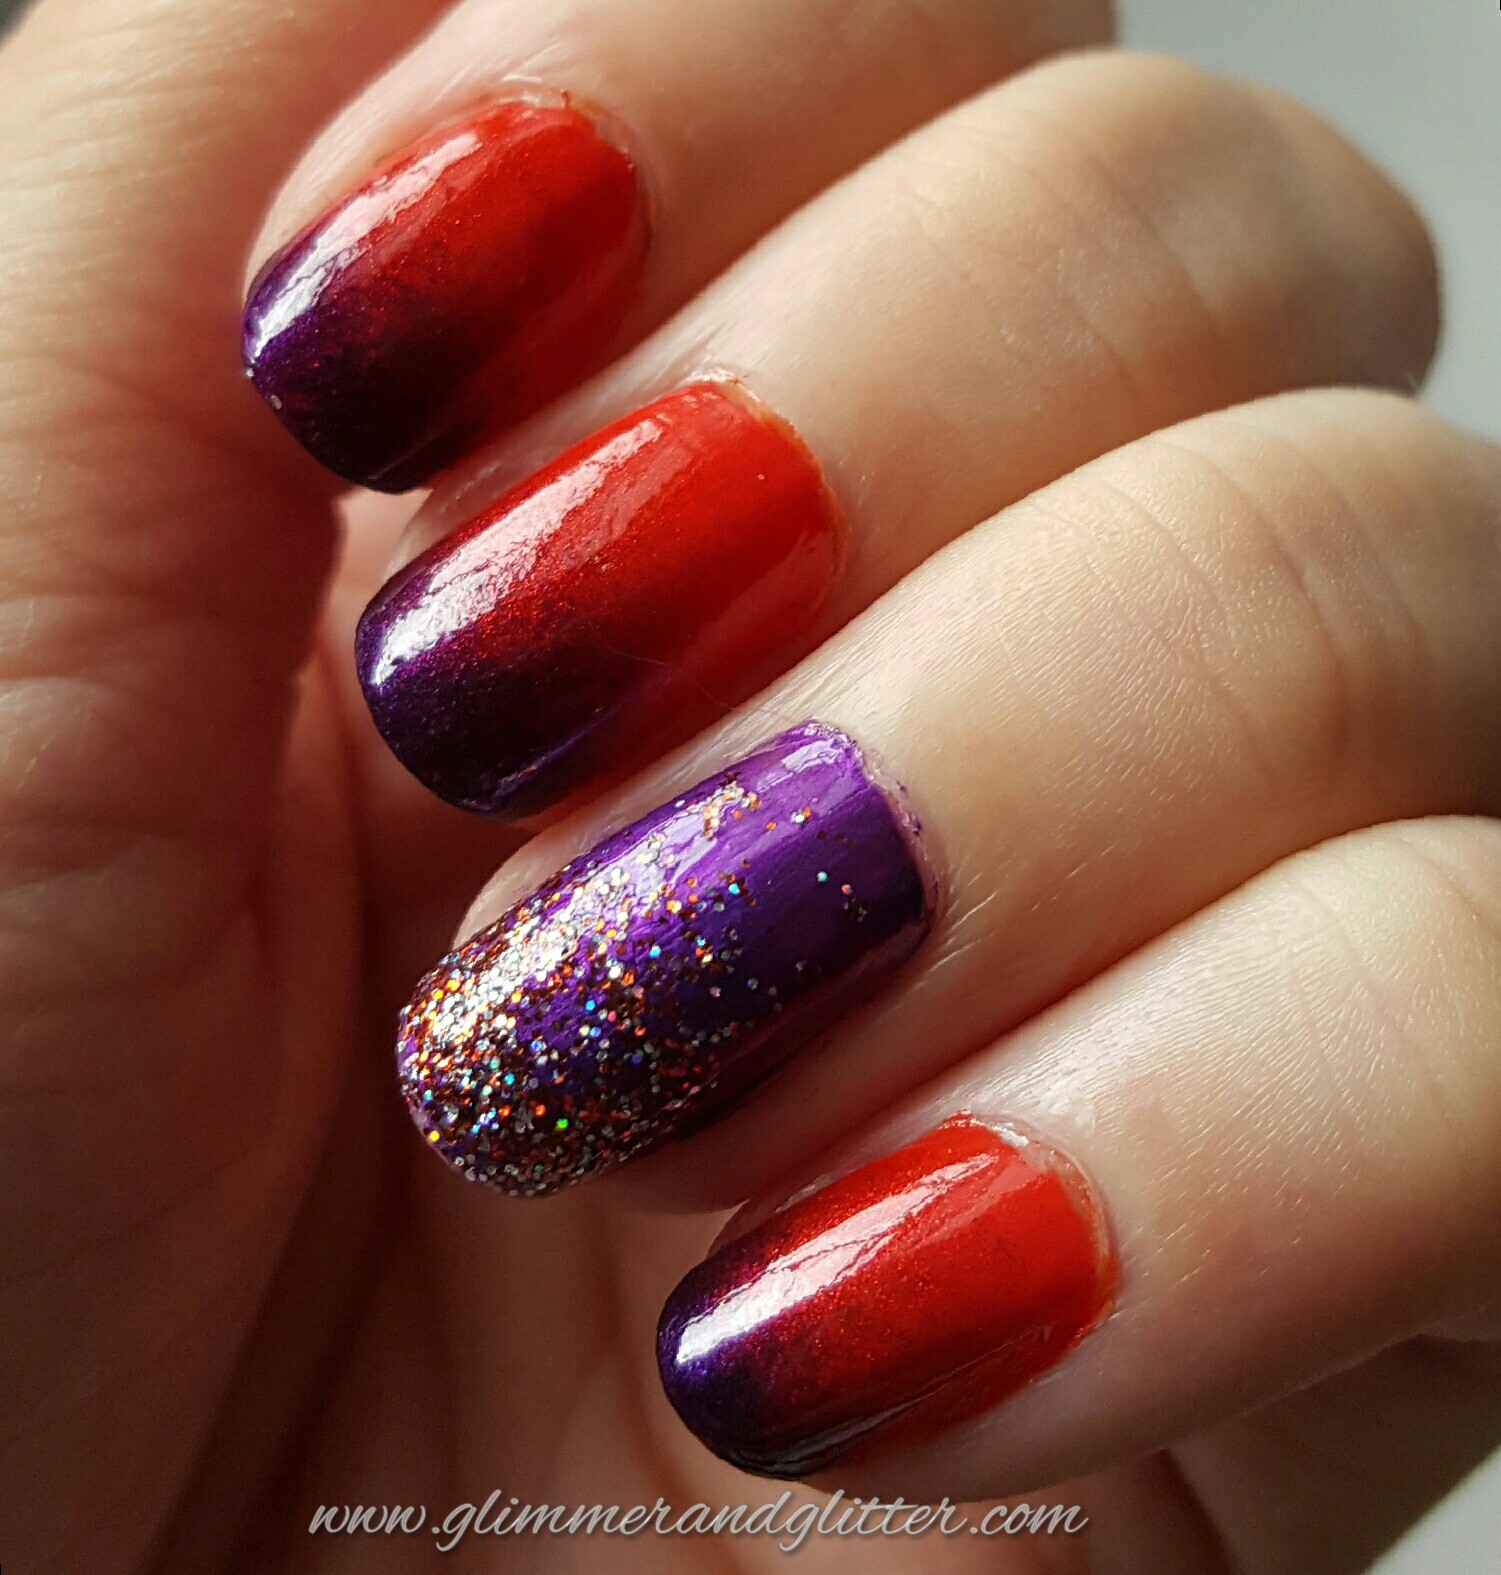 Glimmer and Glitter - A Nail Polish Blog